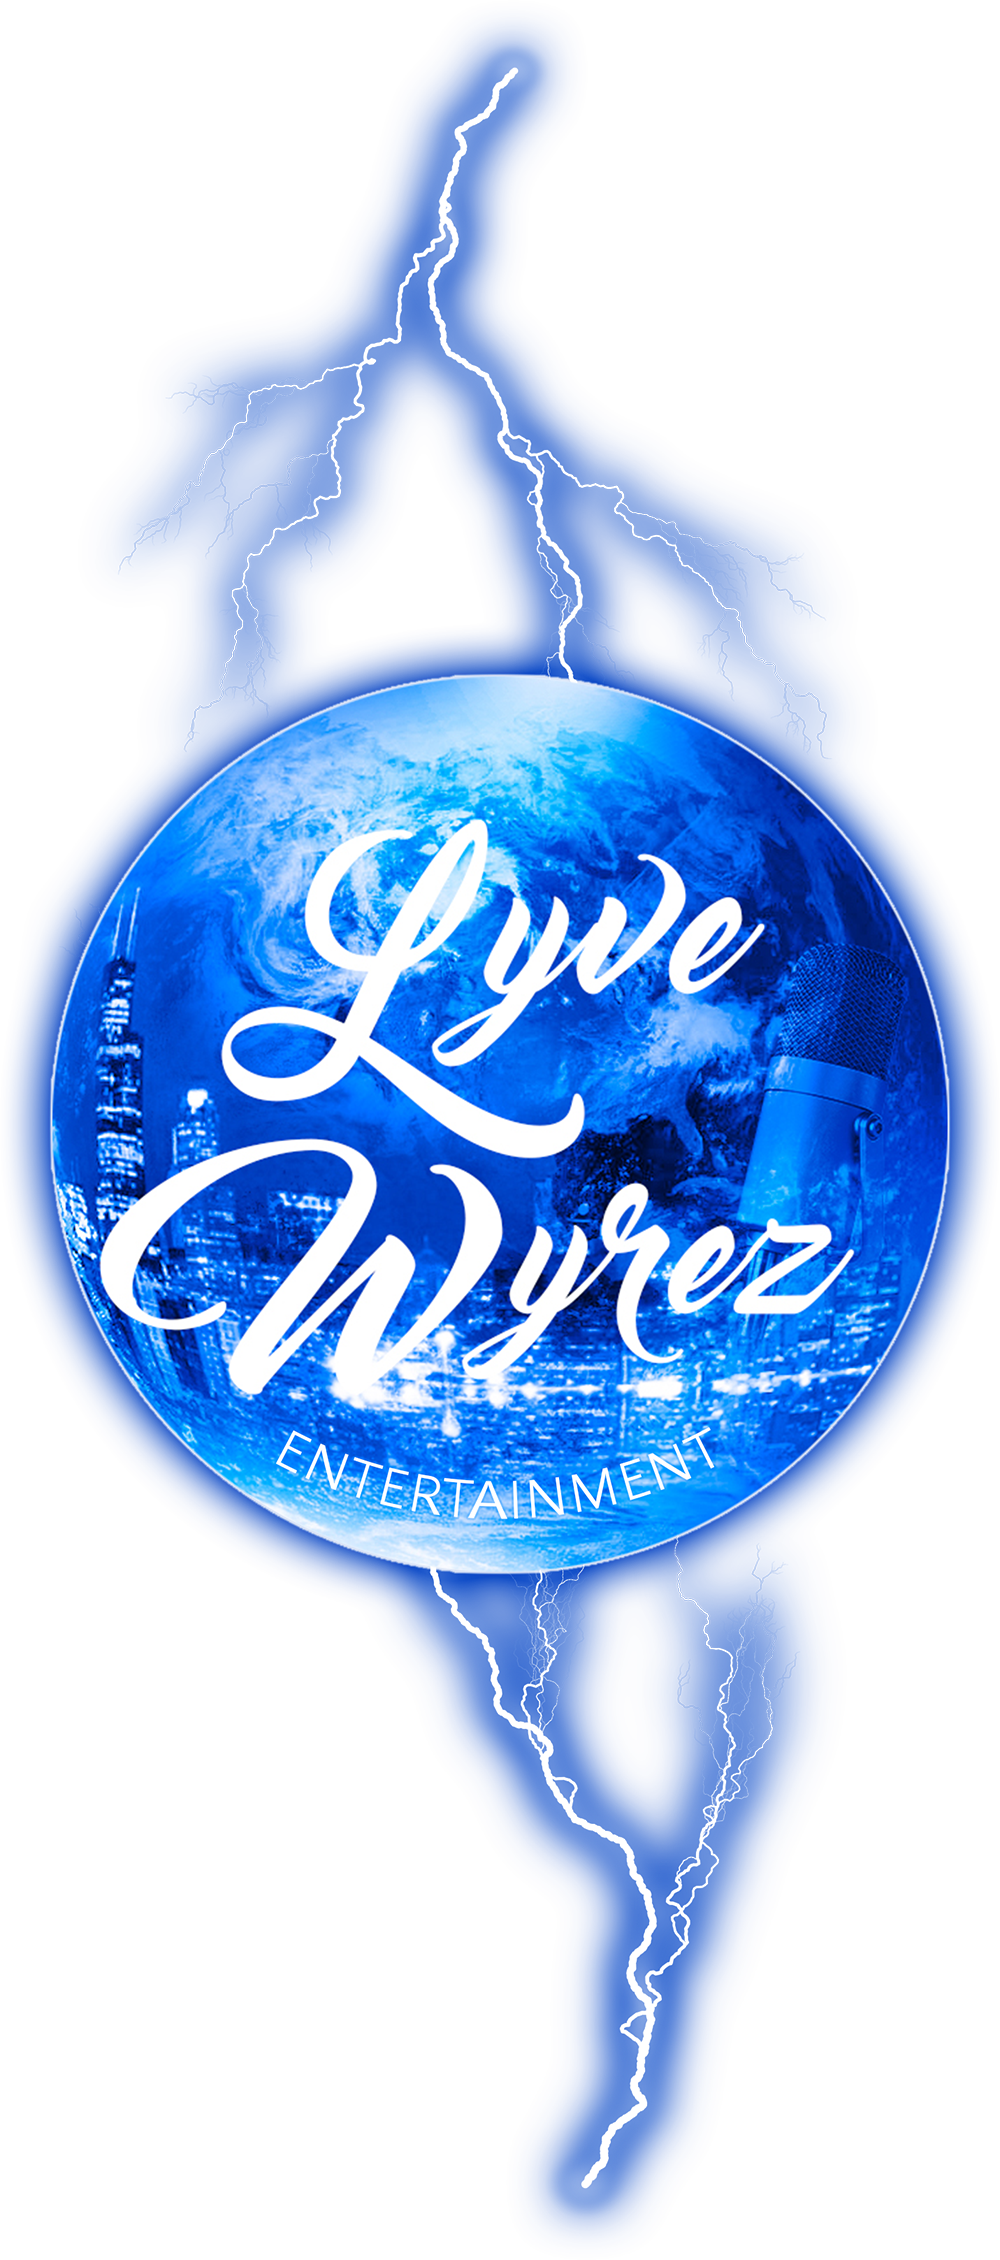 Lyve Wyre Logo 2020 Round